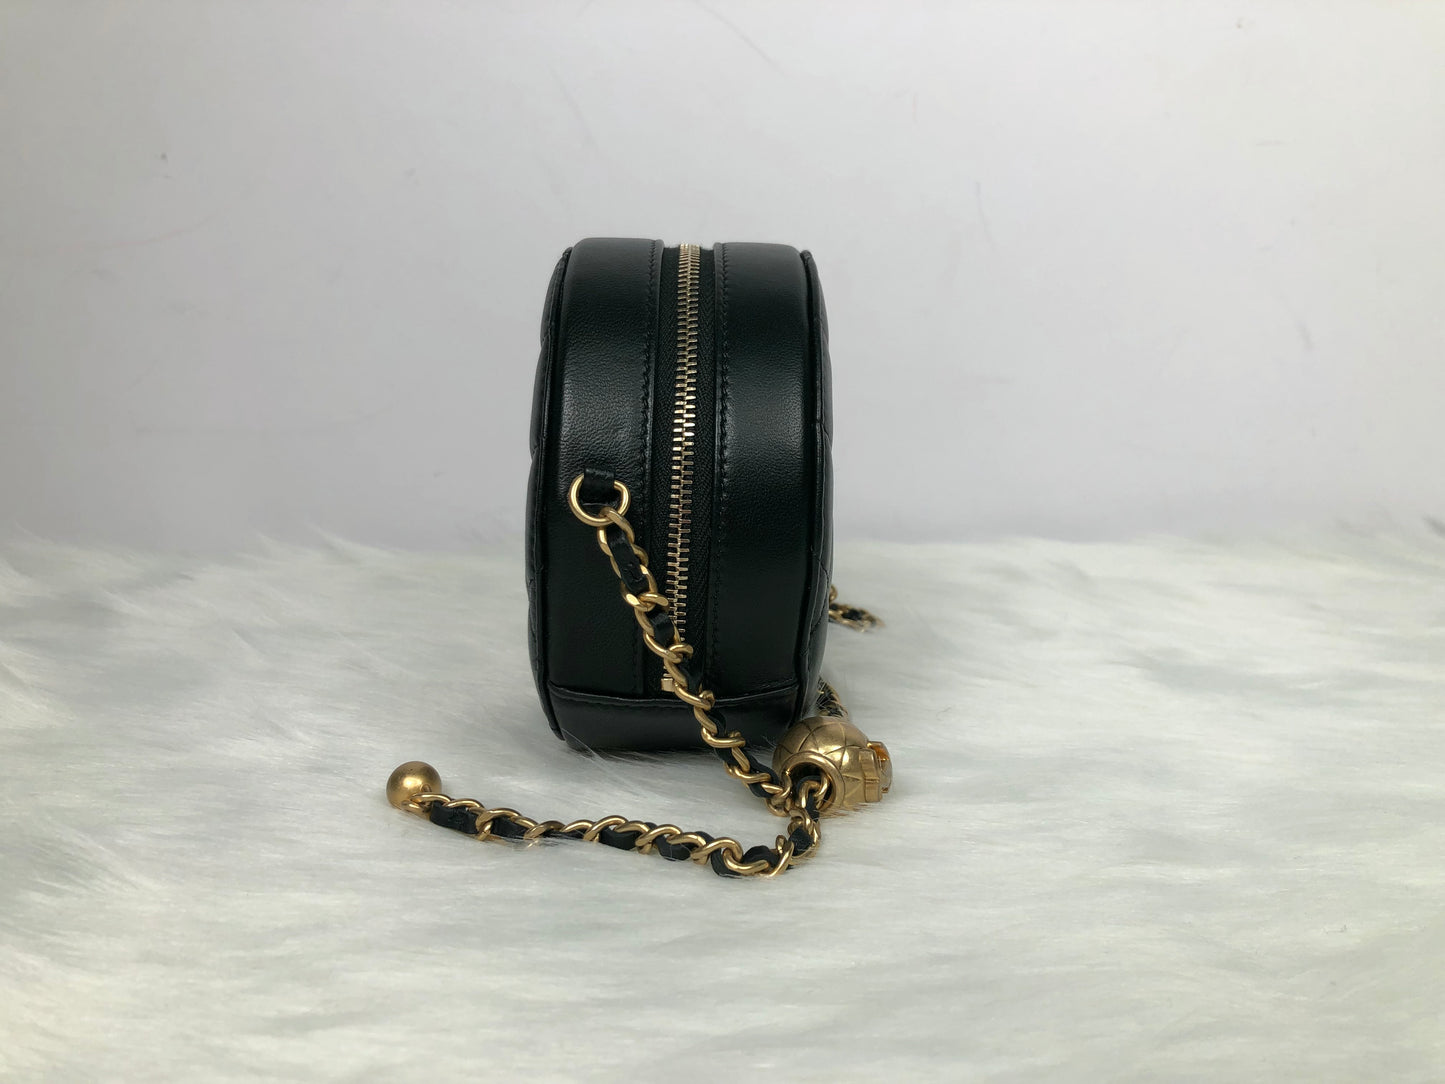 Chanel Clutch With Chain 黑色羊皮金扣金球